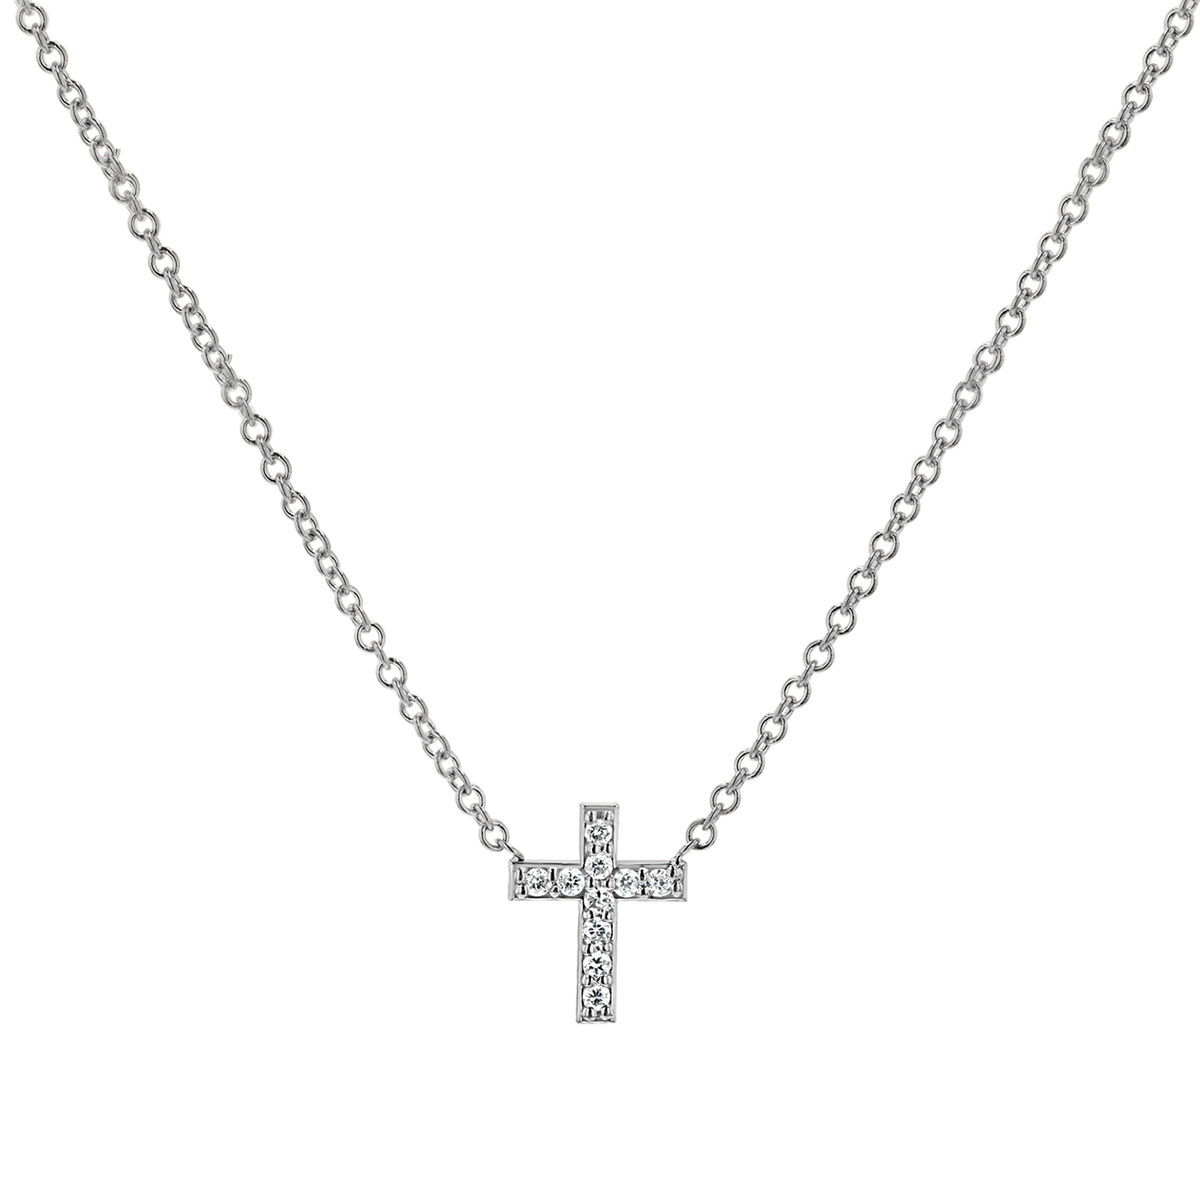 transparent cross necklace